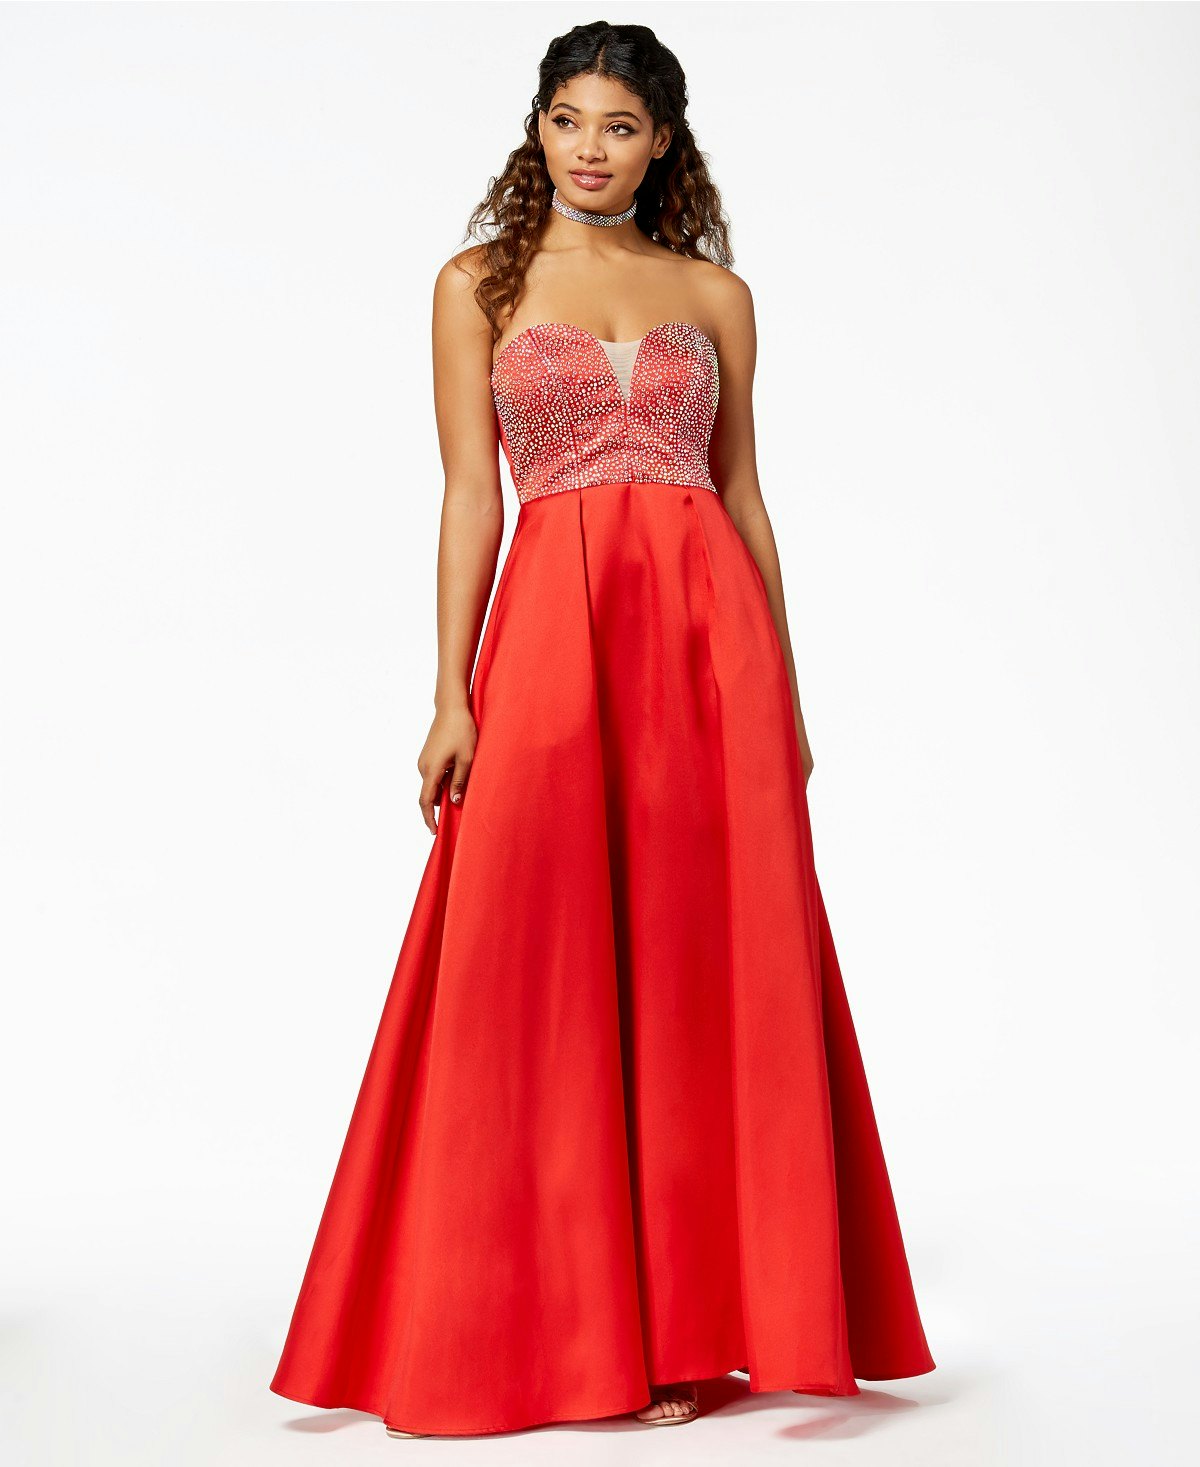 Red Prom Dress Macys Top Sellers, 53 ...